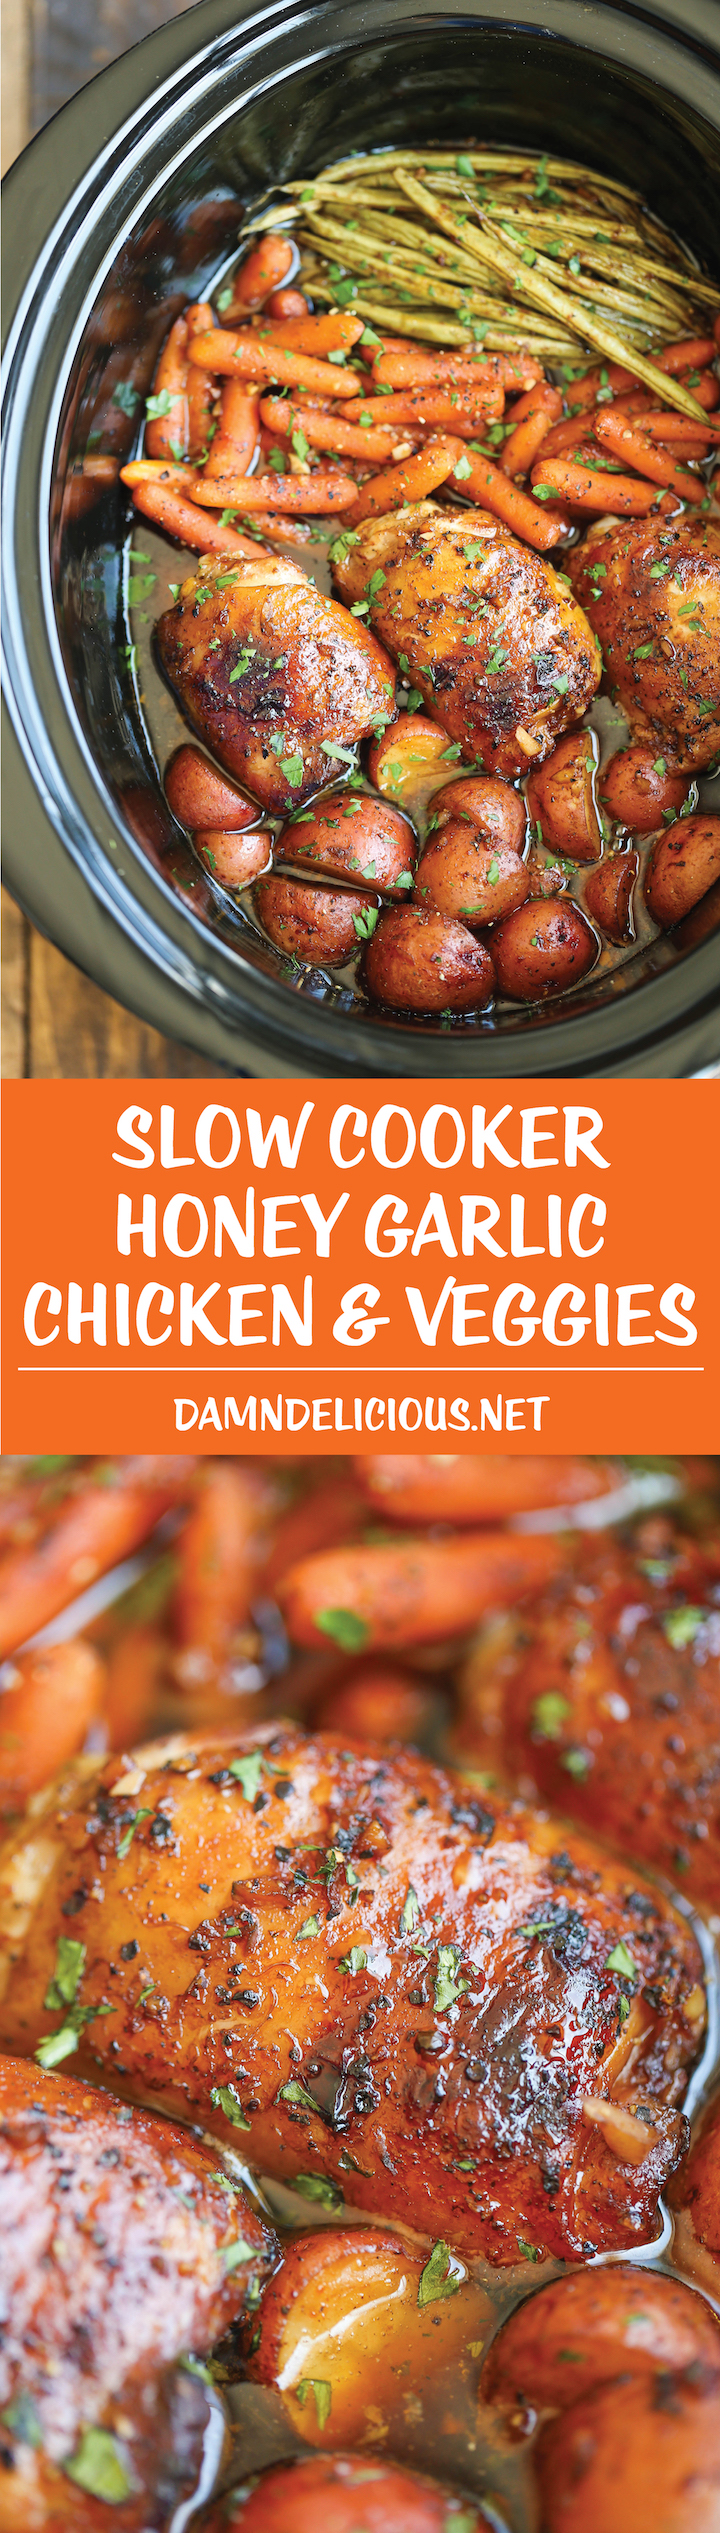 Slow Cooker Honey Garlic Chicken And Veggies Damn Delicious,Alcoholic Beverage Slippery Nipple